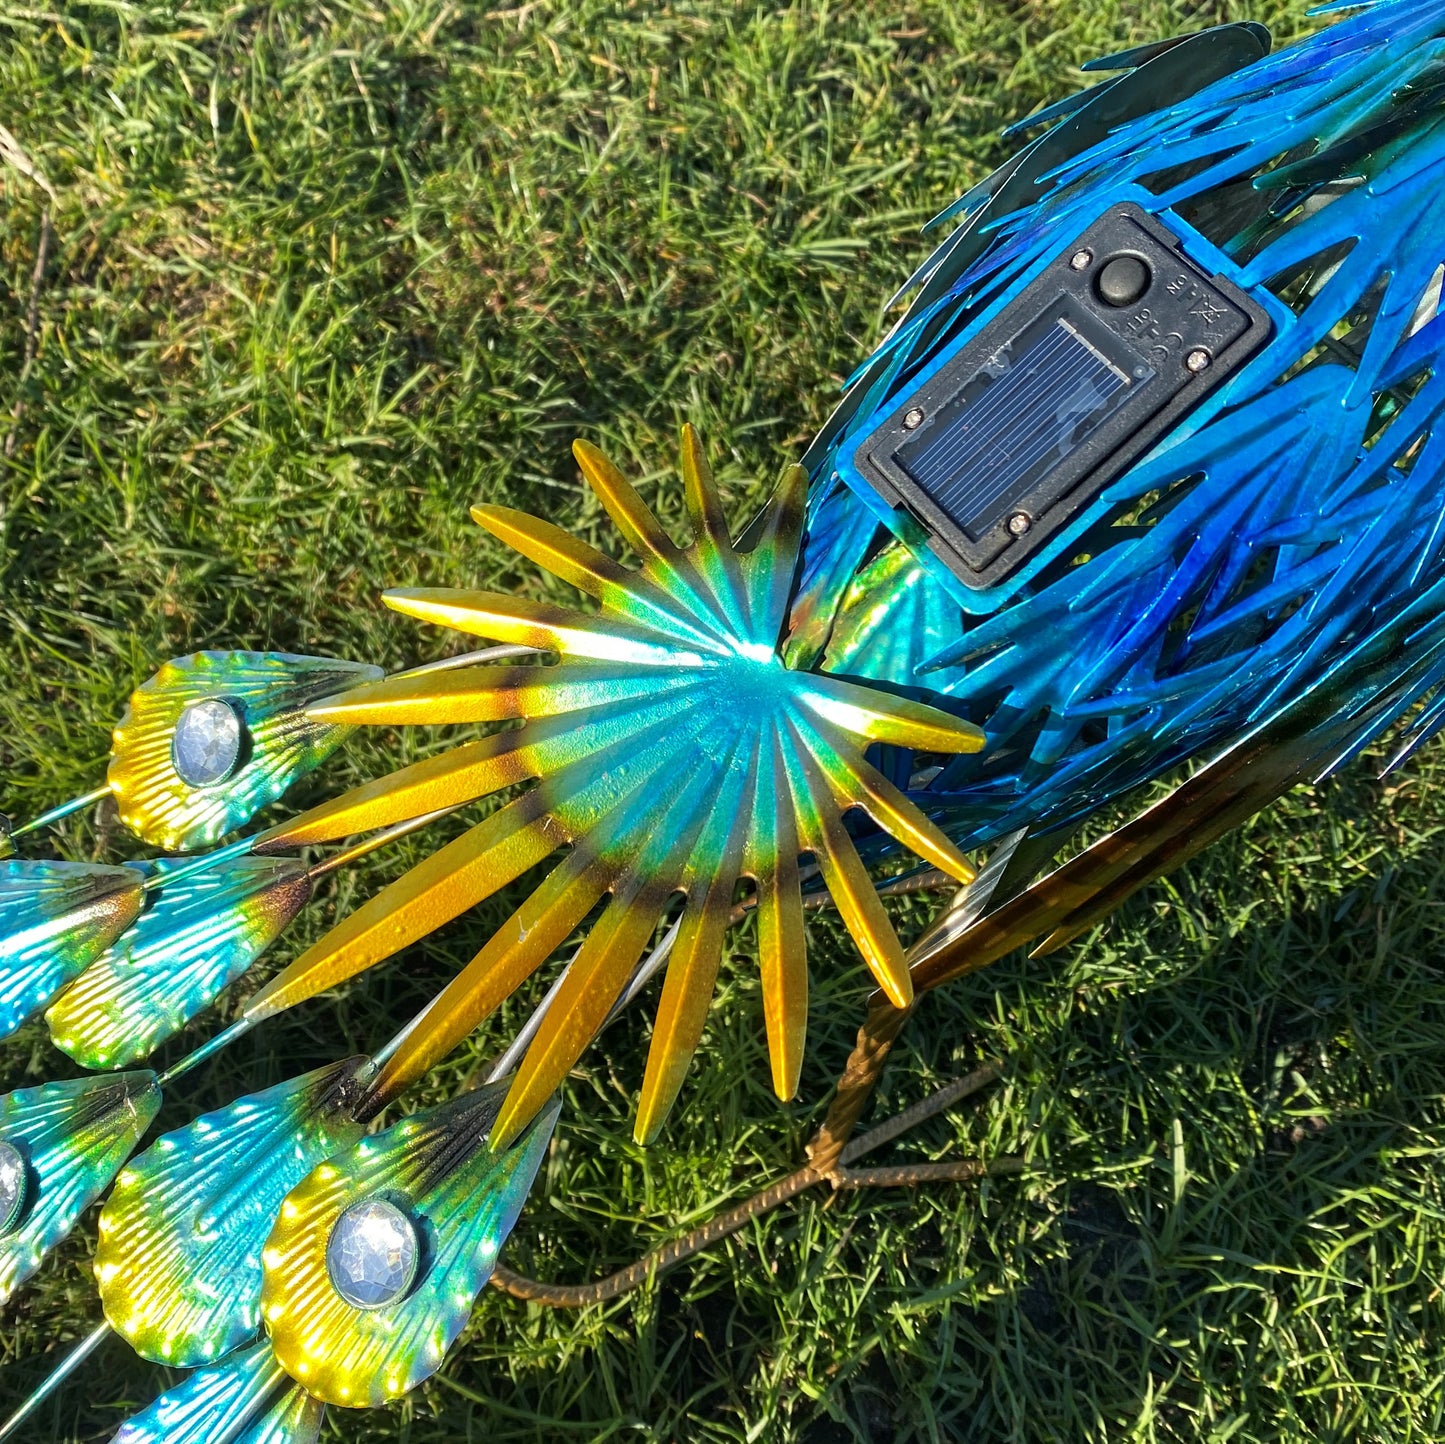 Strutting Peacock Solar Light Garden Ornament